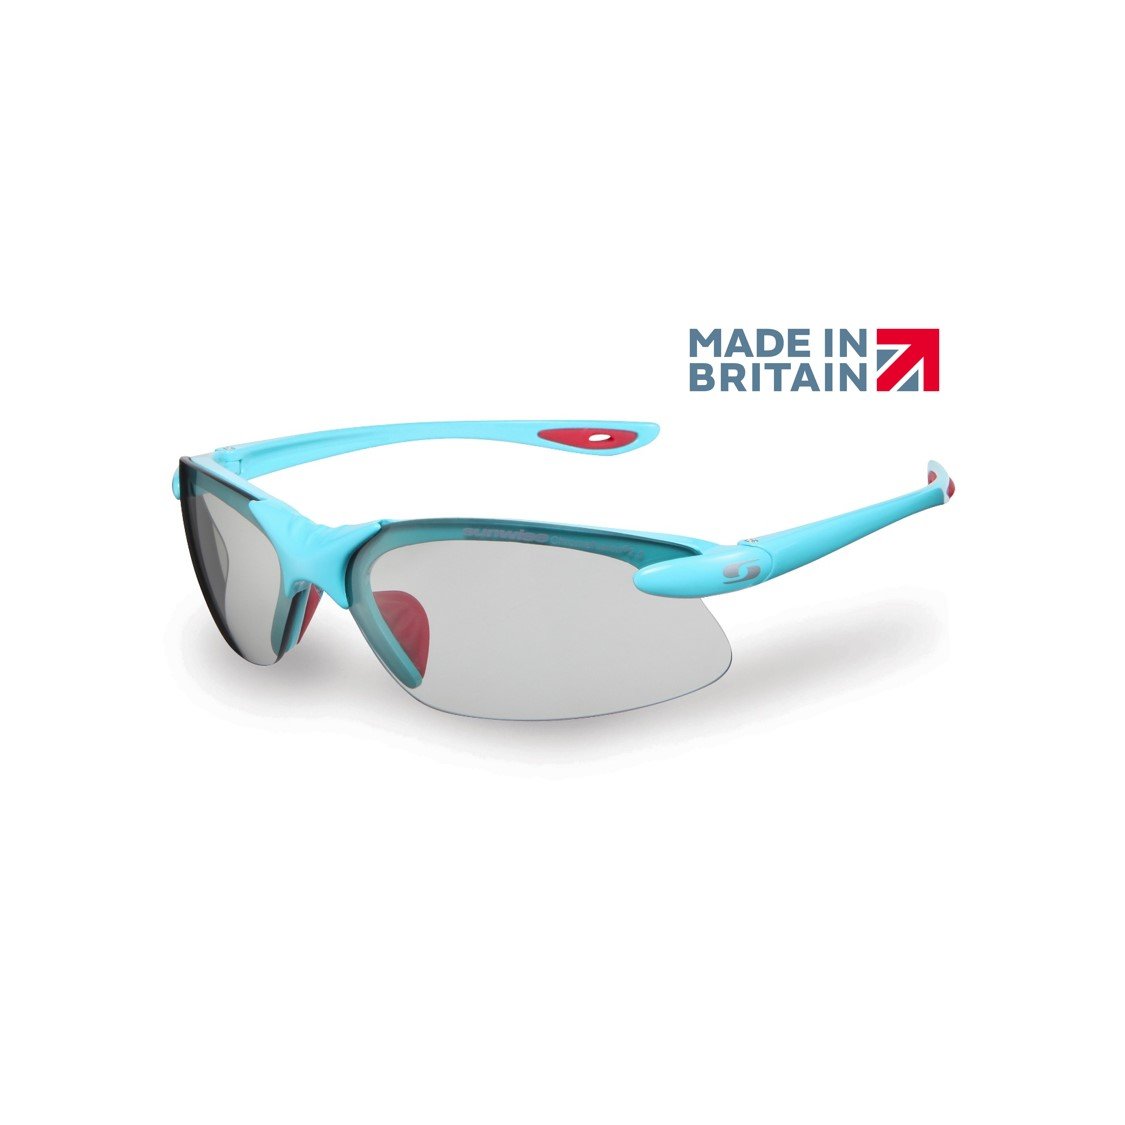 Sunwise photochromic Waterloo Sports Sunglasses in Blue